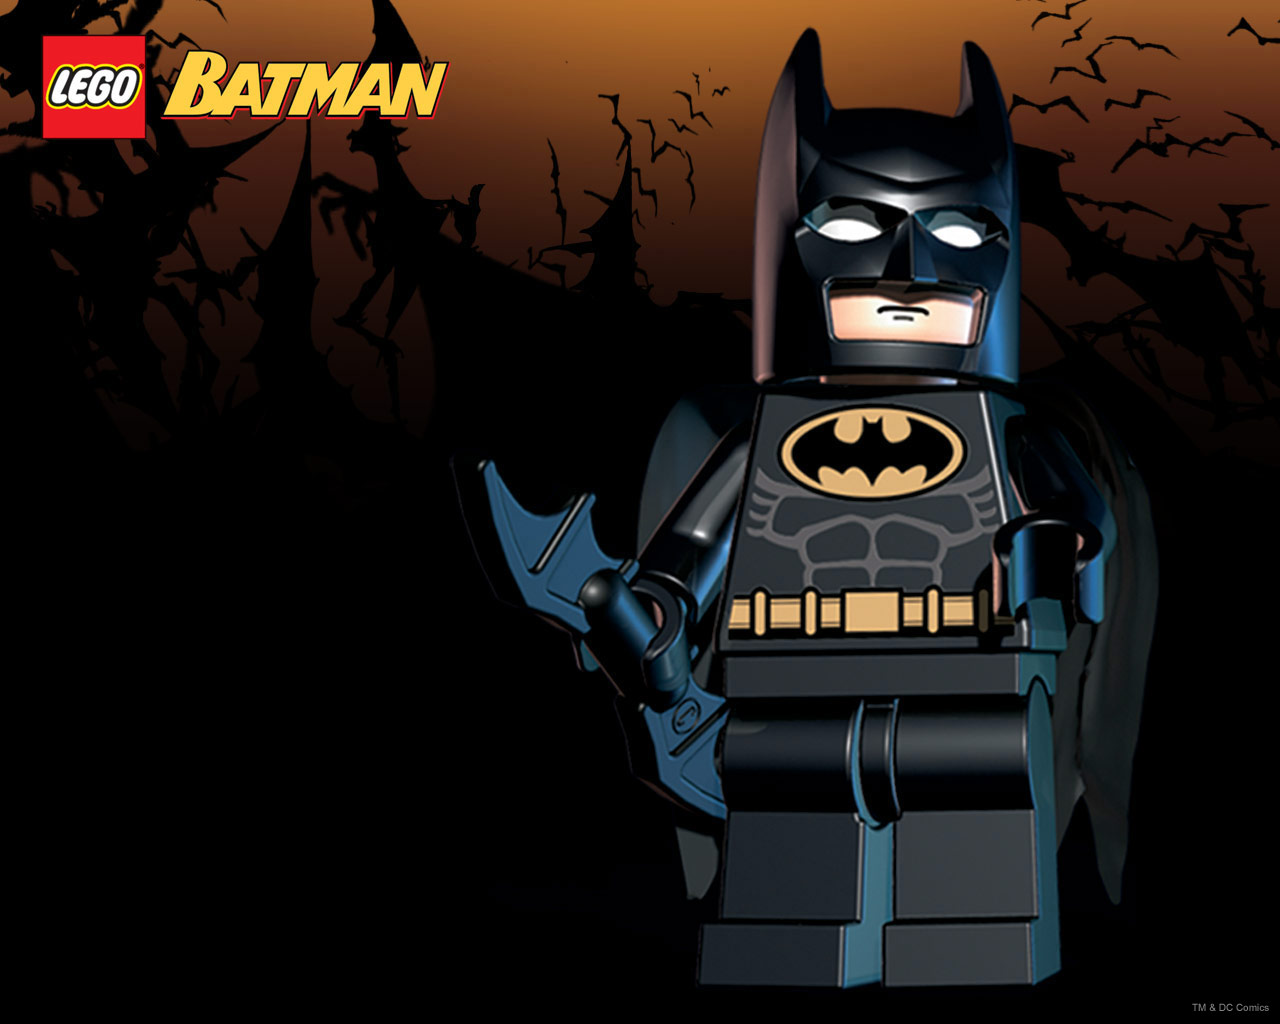 46+] LEGO Batman 3 Wallpaper - WallpaperSafari